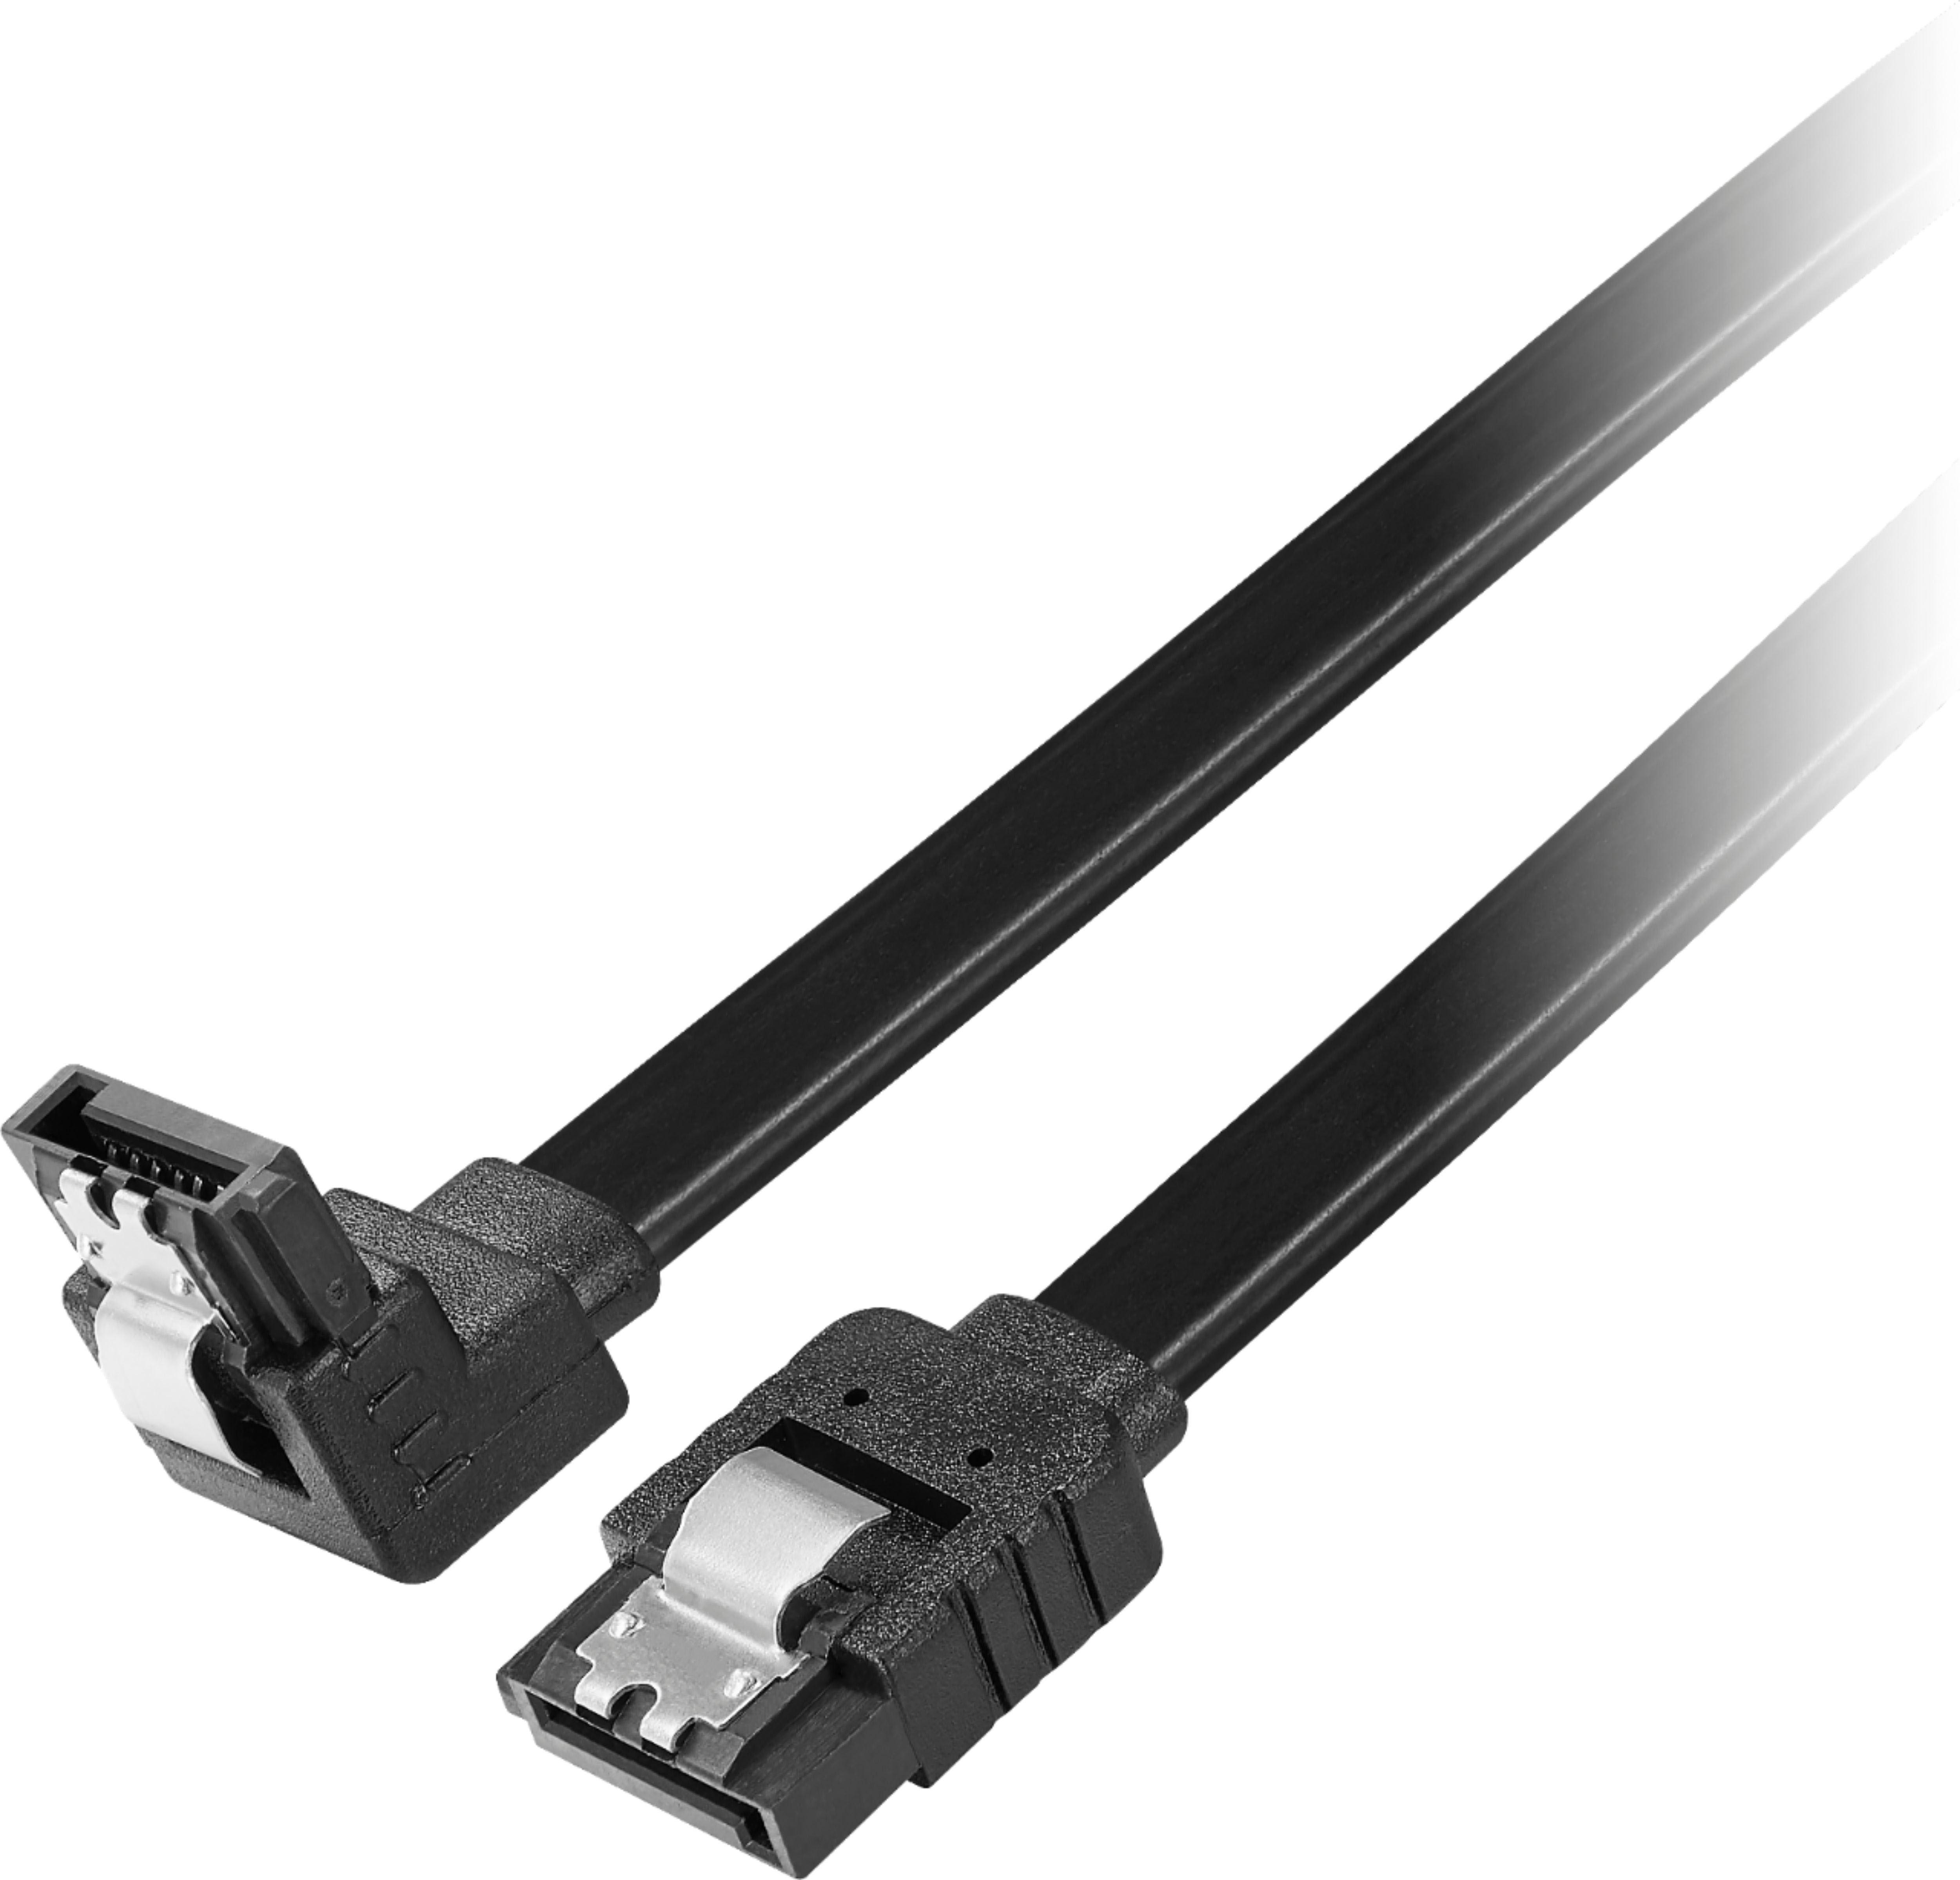 Angle View: Insignia™ - 2' SATA III Hard Drive Cable - Black